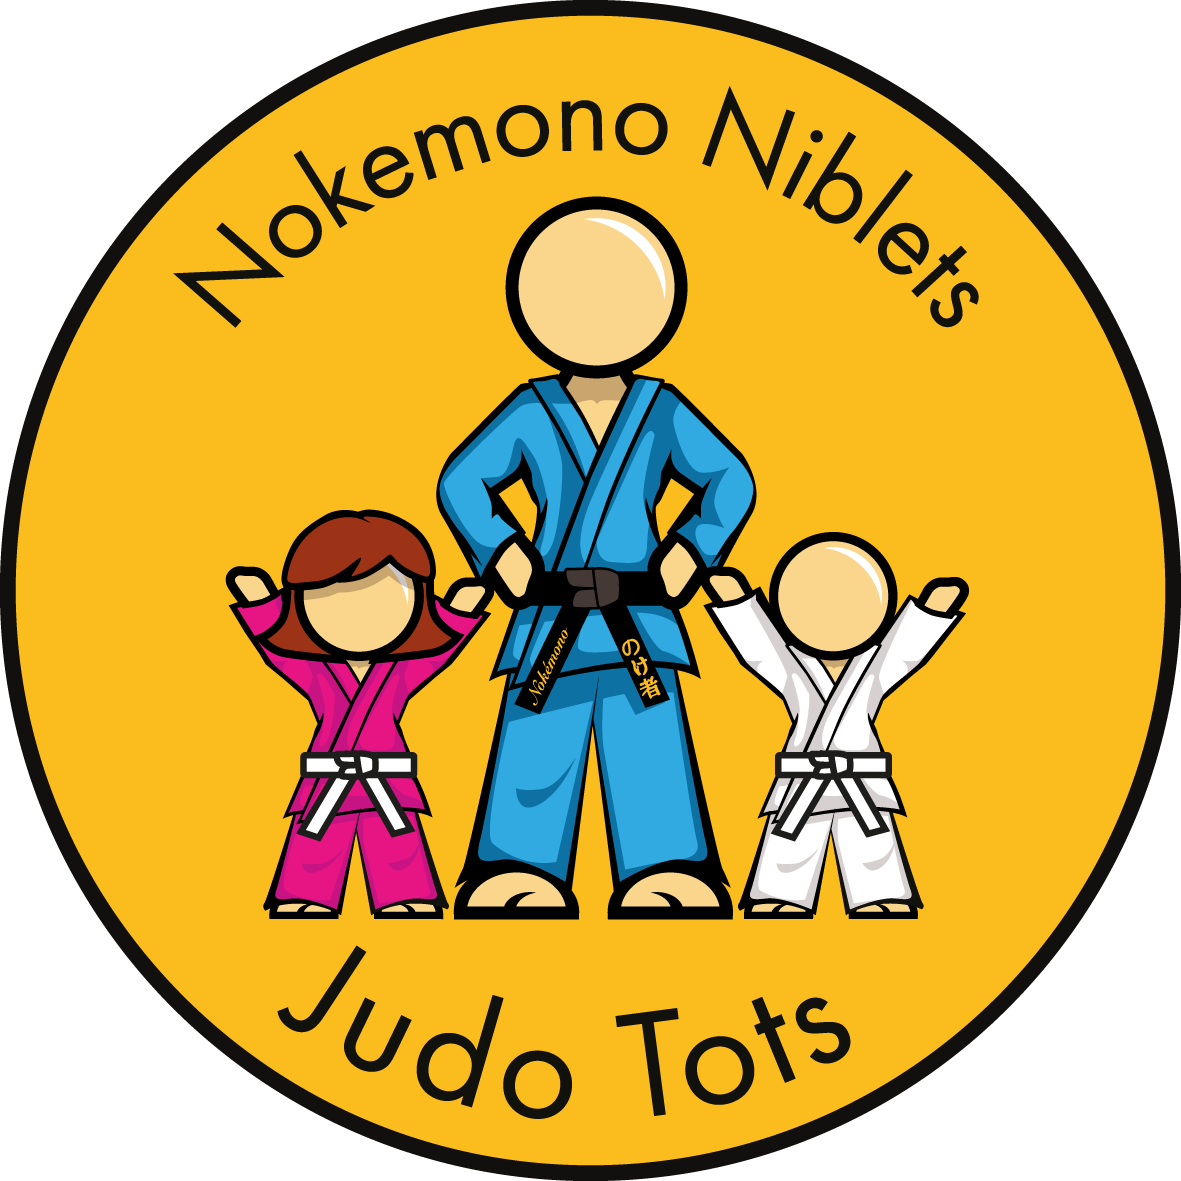 Nokemono Niblets logo